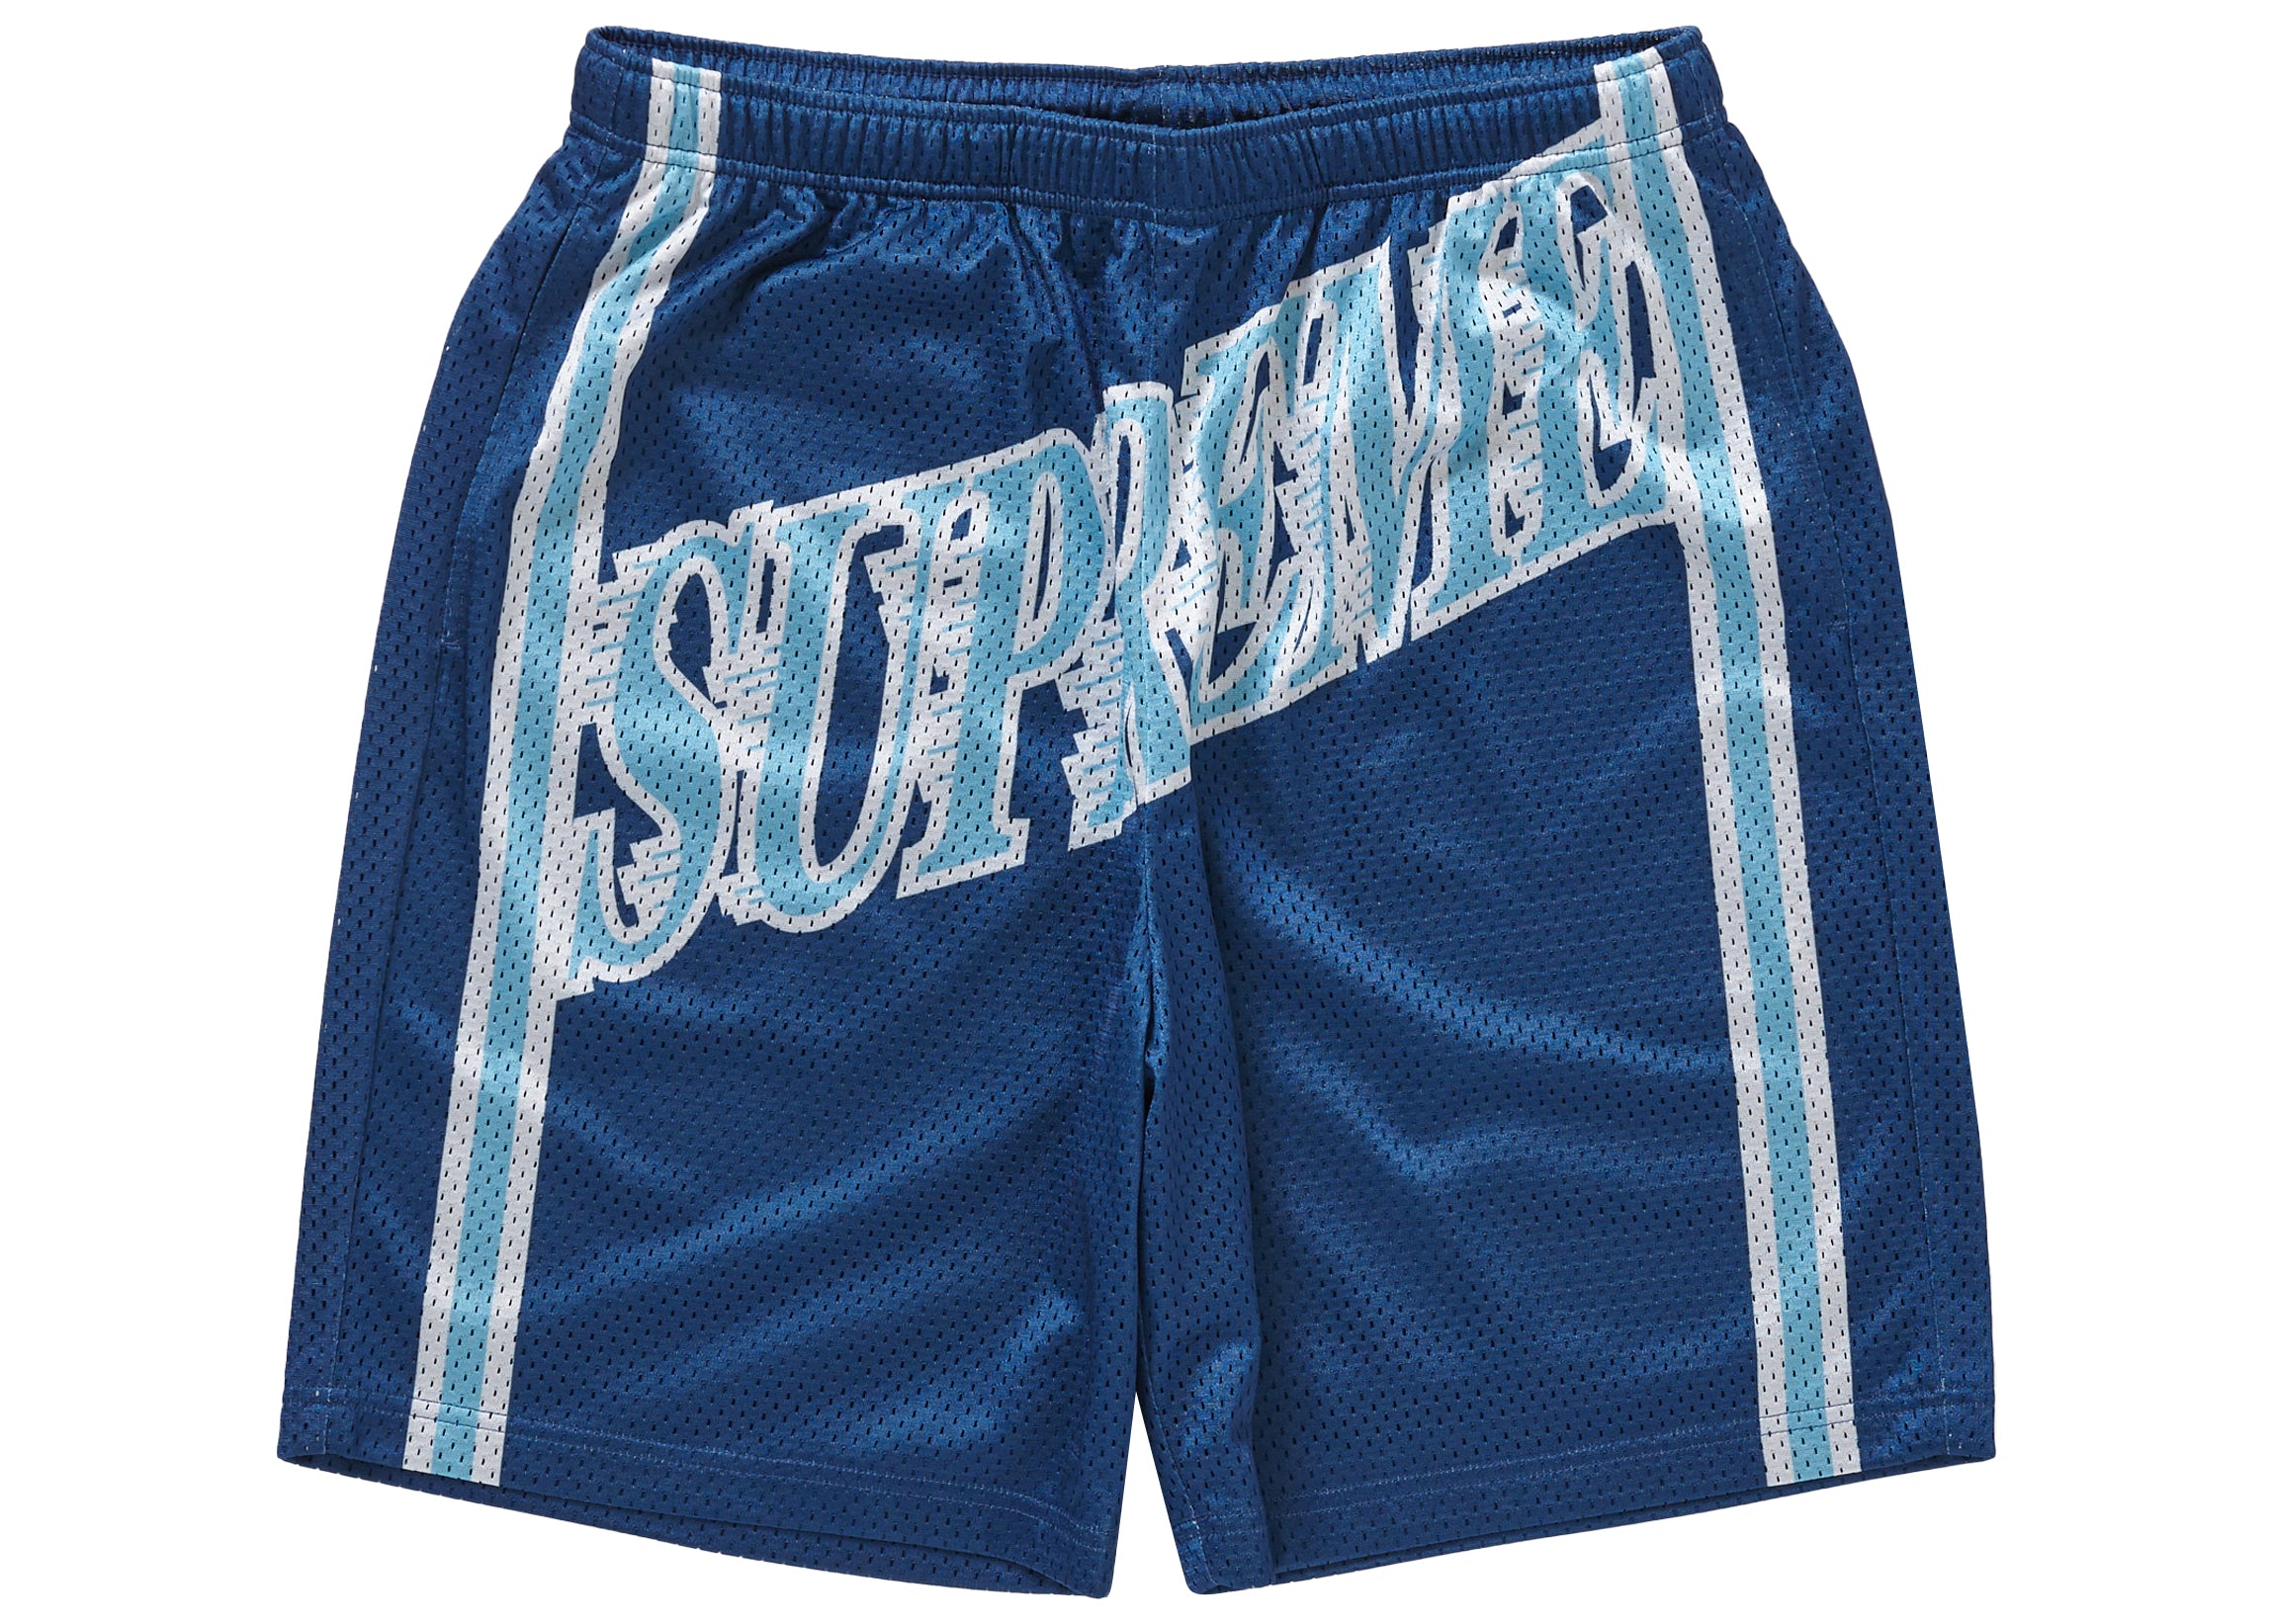 Supreme SS20 Men's Large Nylon Water Shorts Swim Trunks Teal